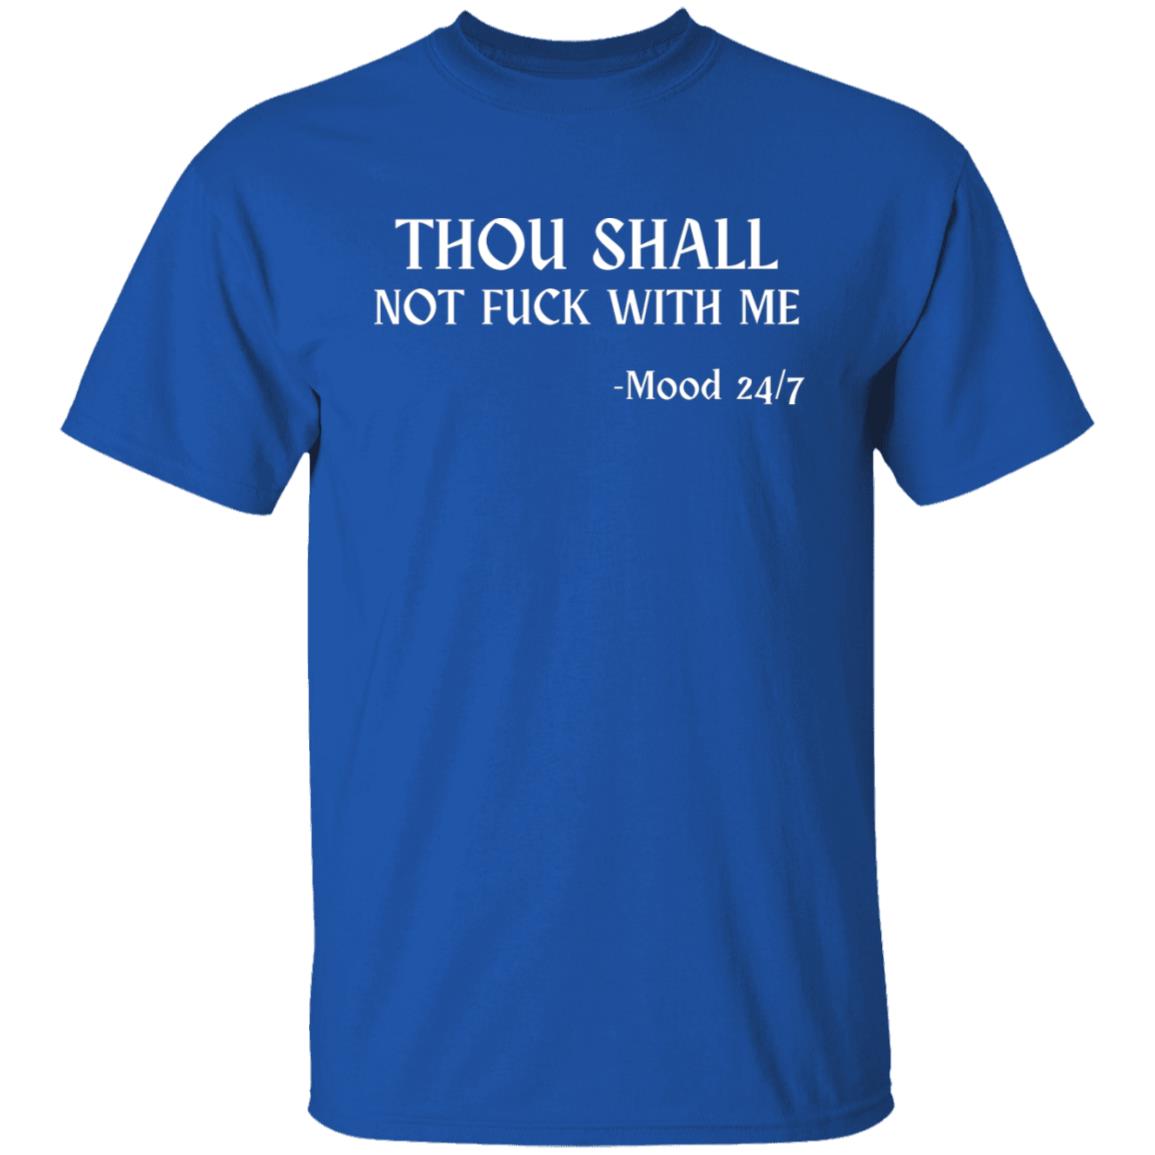 Ten Commandments Thou Shall Not FU$K With Me Punk Rock Graphic T-Shirt